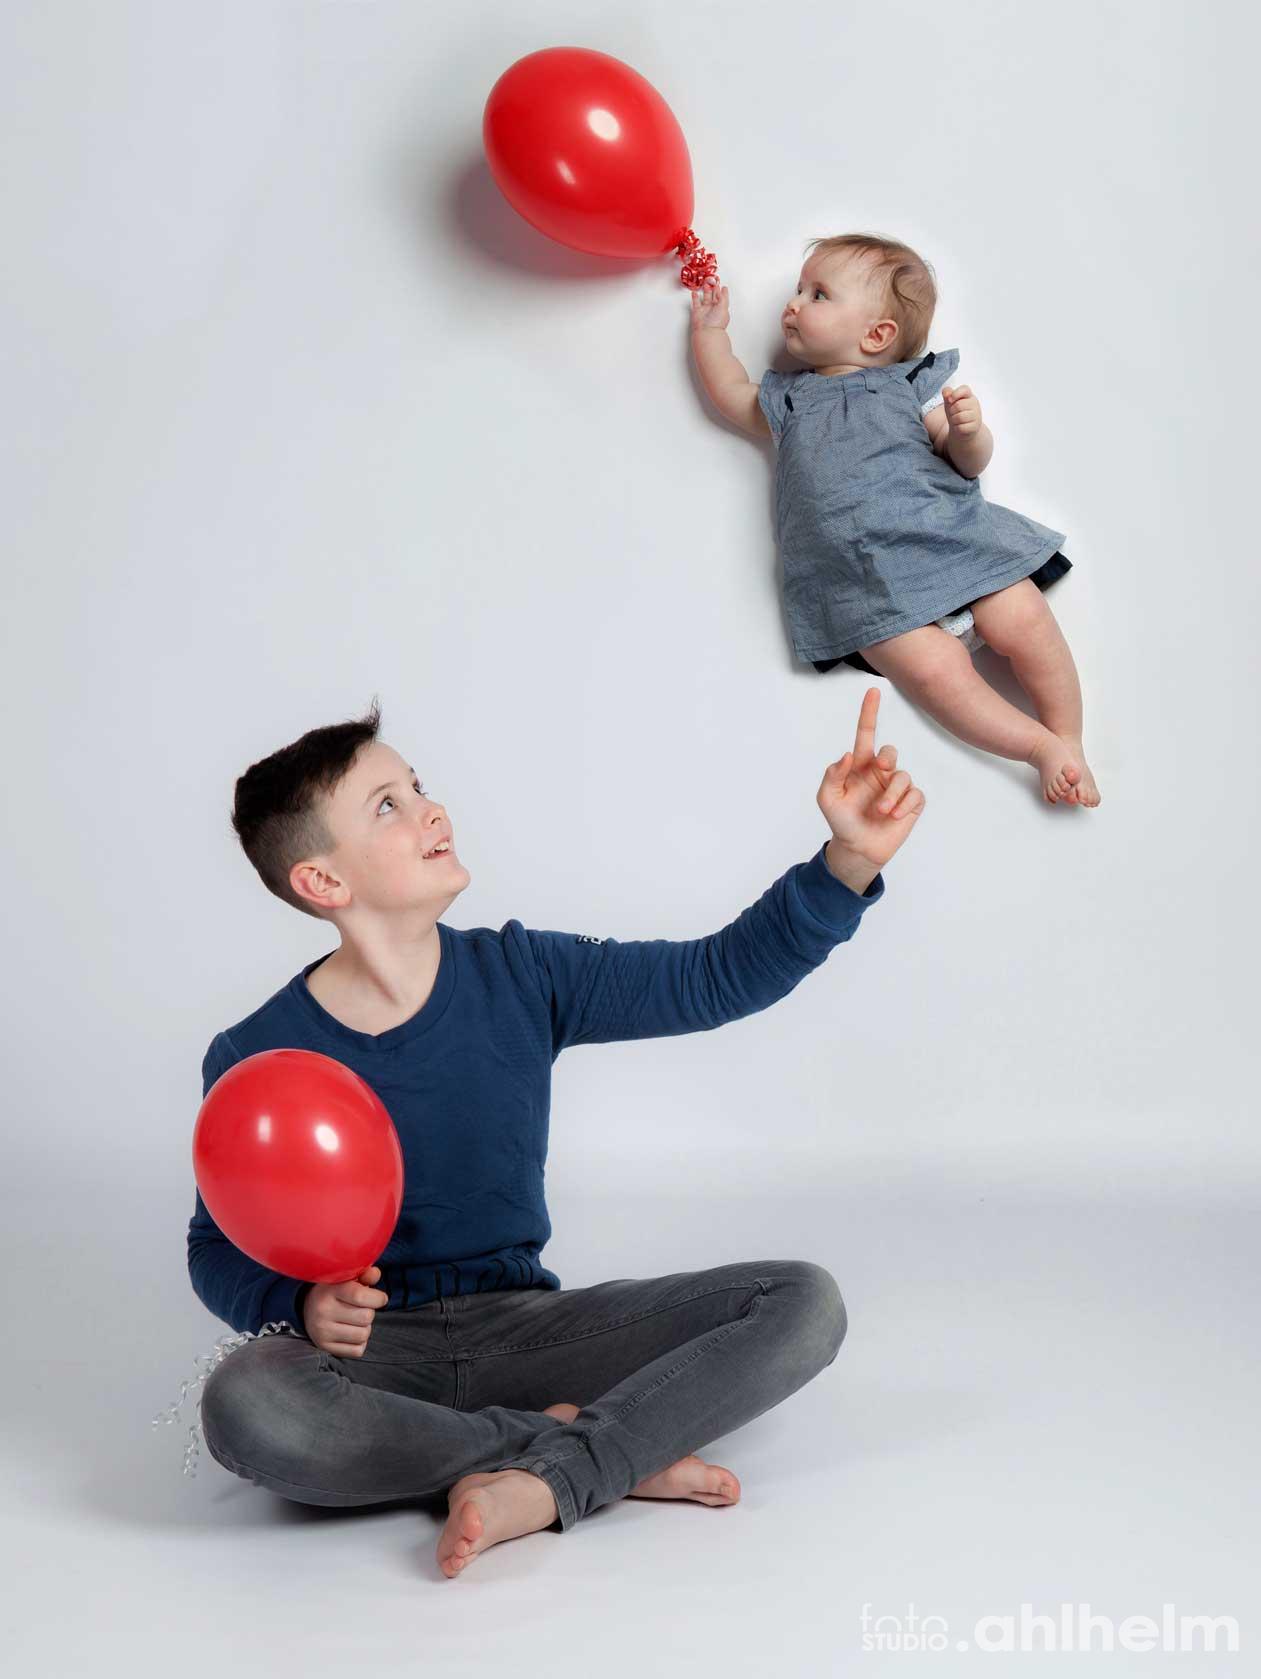 Fotostudio Ahlhelm Kinder Collage Geschwister Ballon